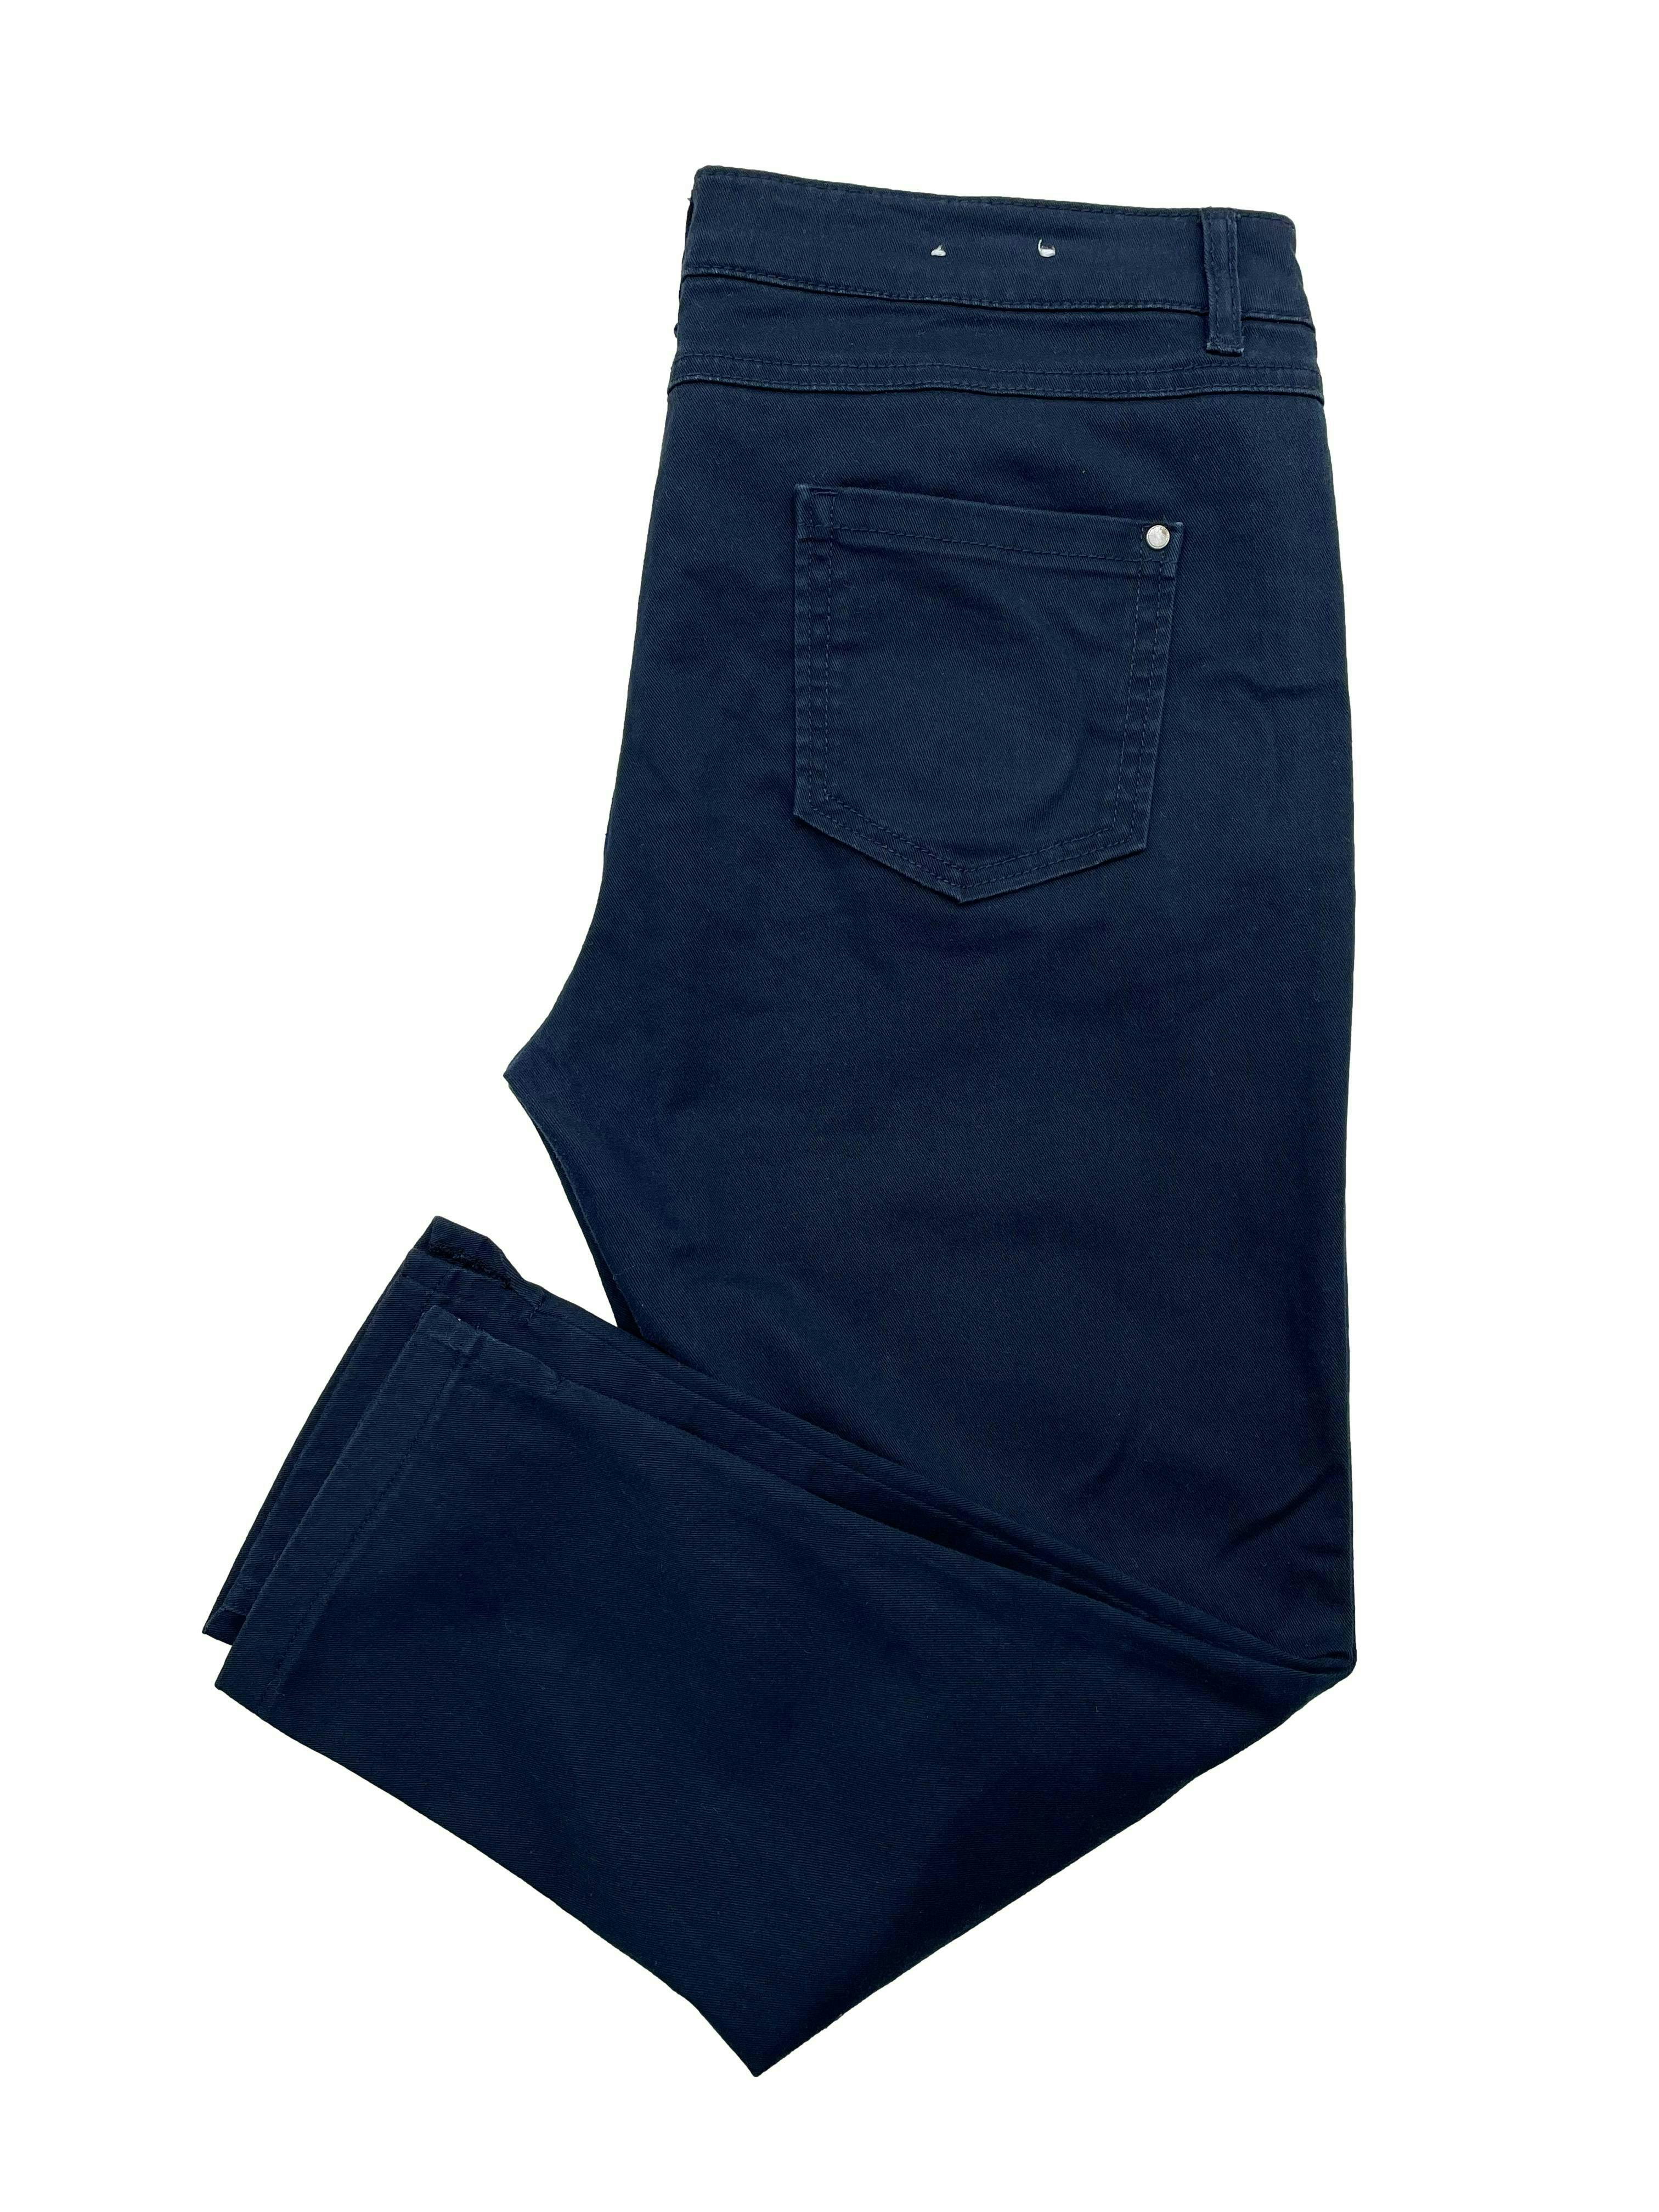 Pantalón Sfera drill azul marino, corte recto, five pockets y aberturas laterales. Cintura 90cm, Tiro 25cm, Largo 84cm.